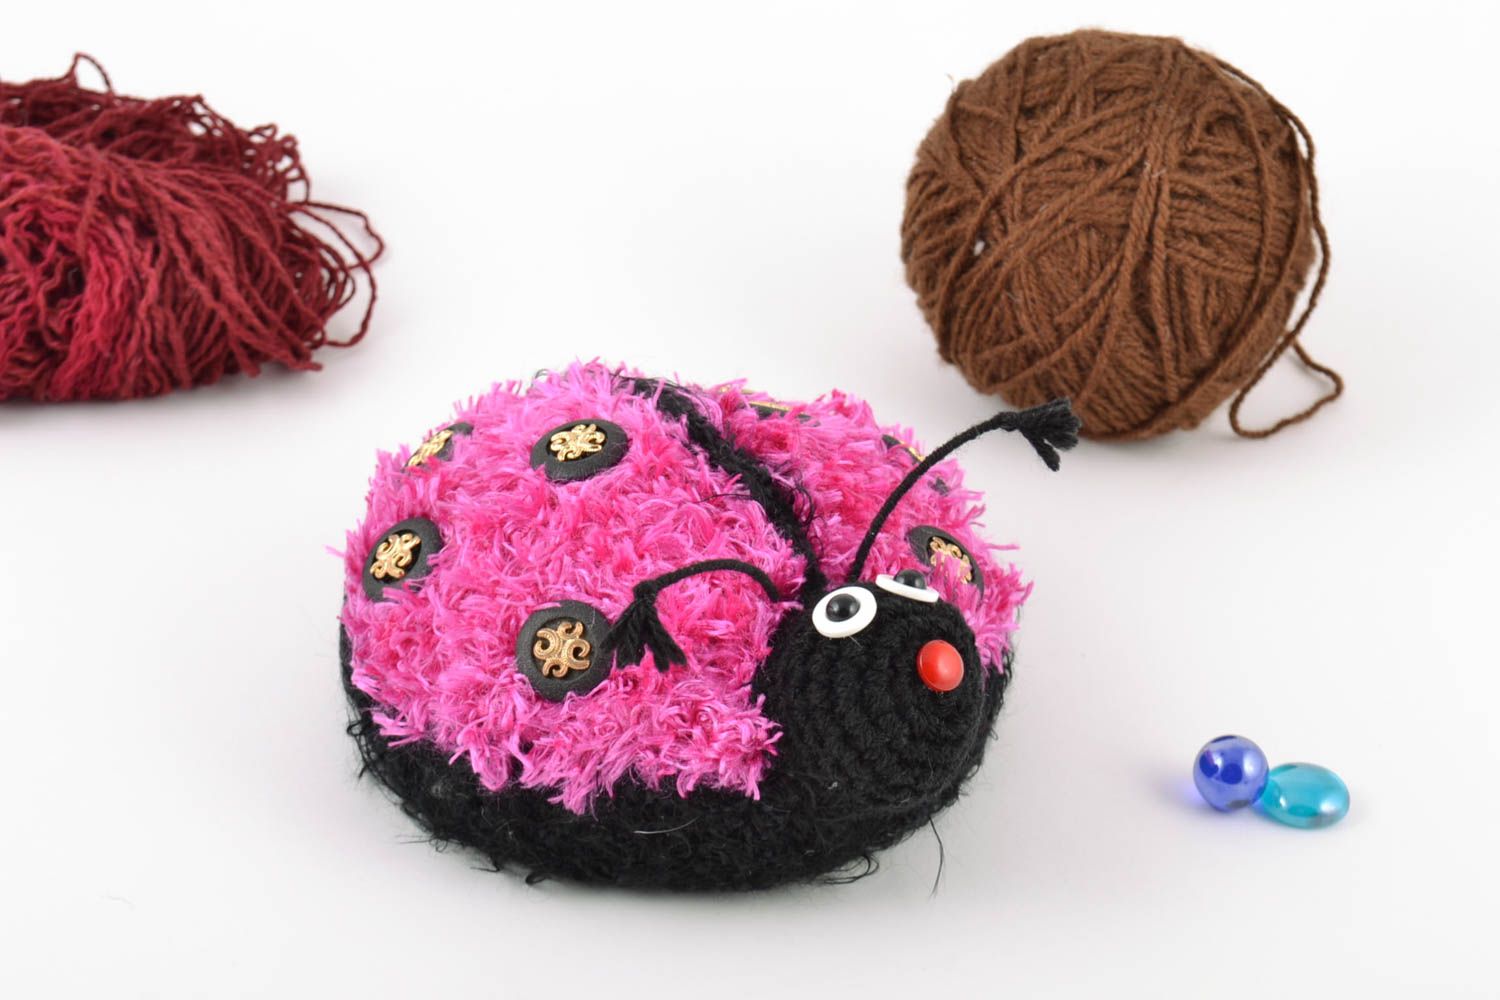 Handmade pink crochet soft toy created using amigurumi technique in the shape of ladybug photo 1